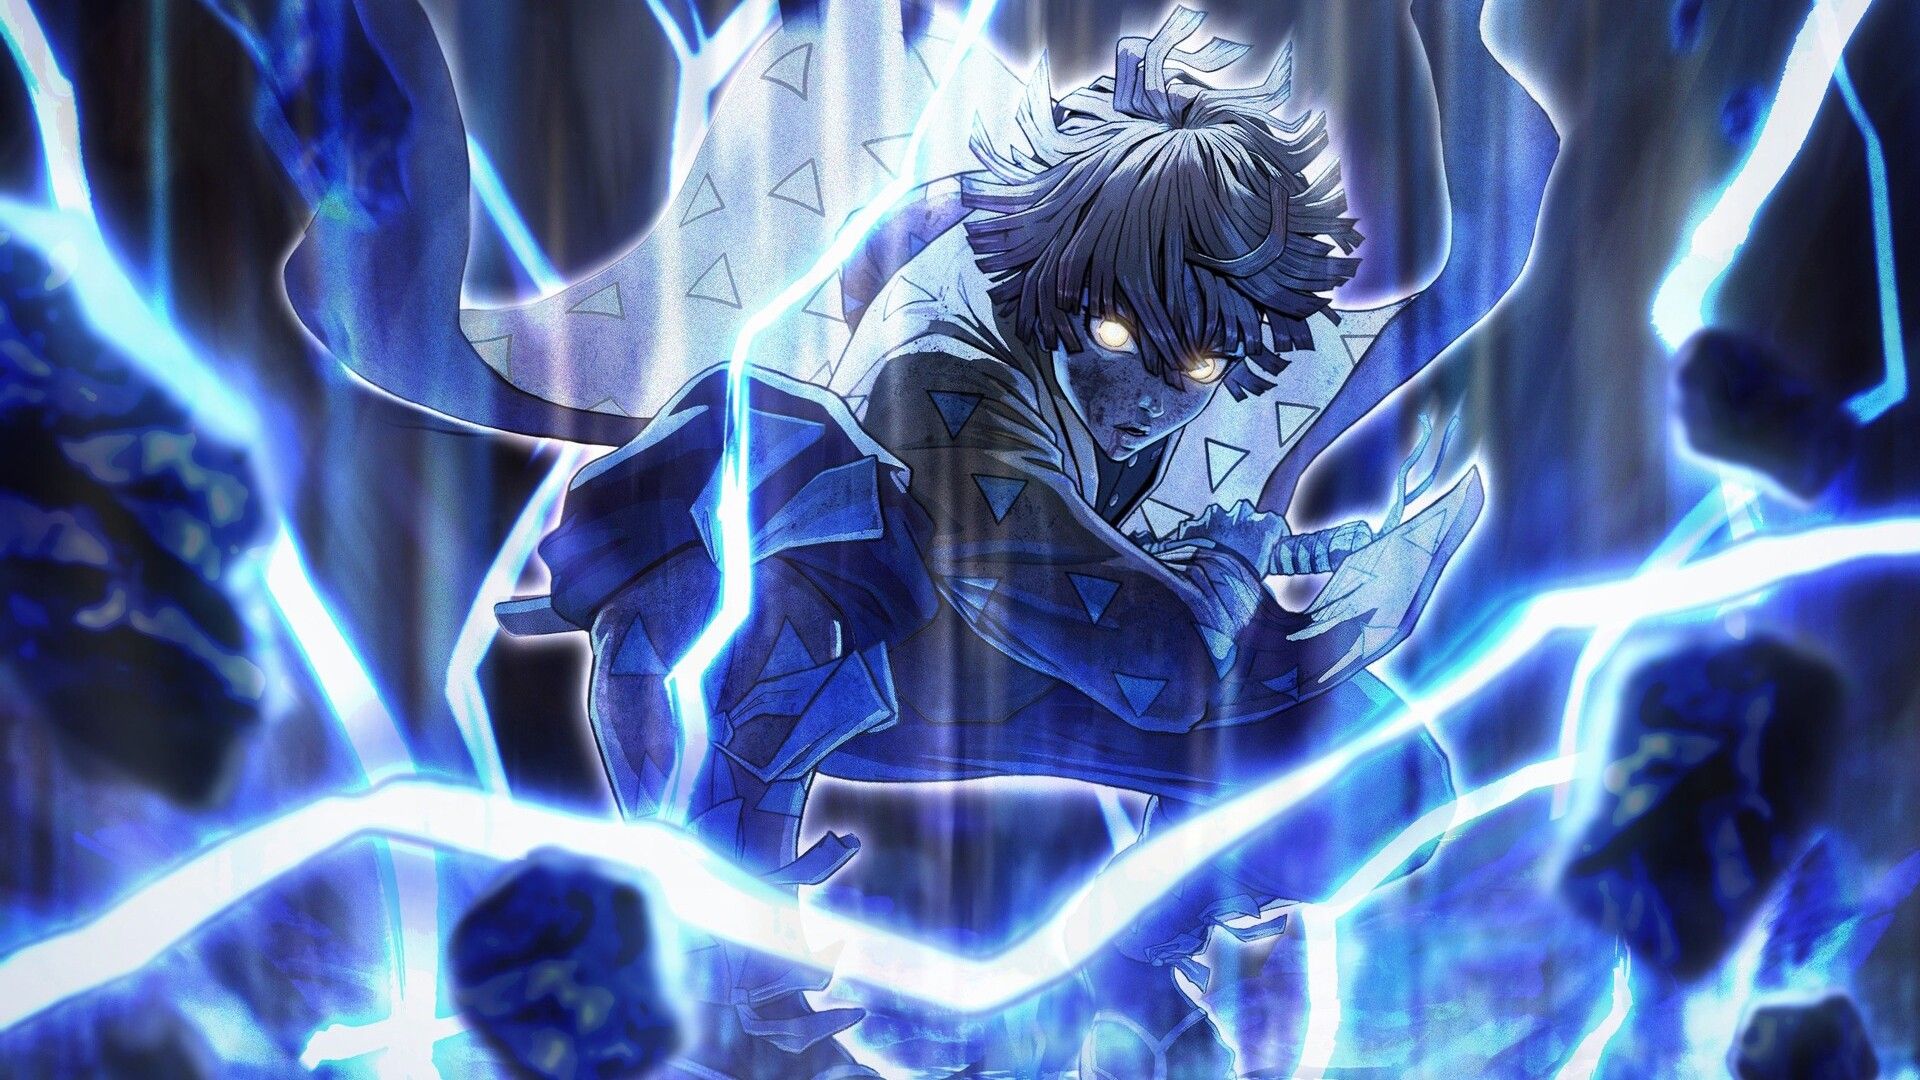 Demon Slayer Zenitsu Agatsuma Around Blue Lightning With Black Backgorund HD Anime Wallpaper